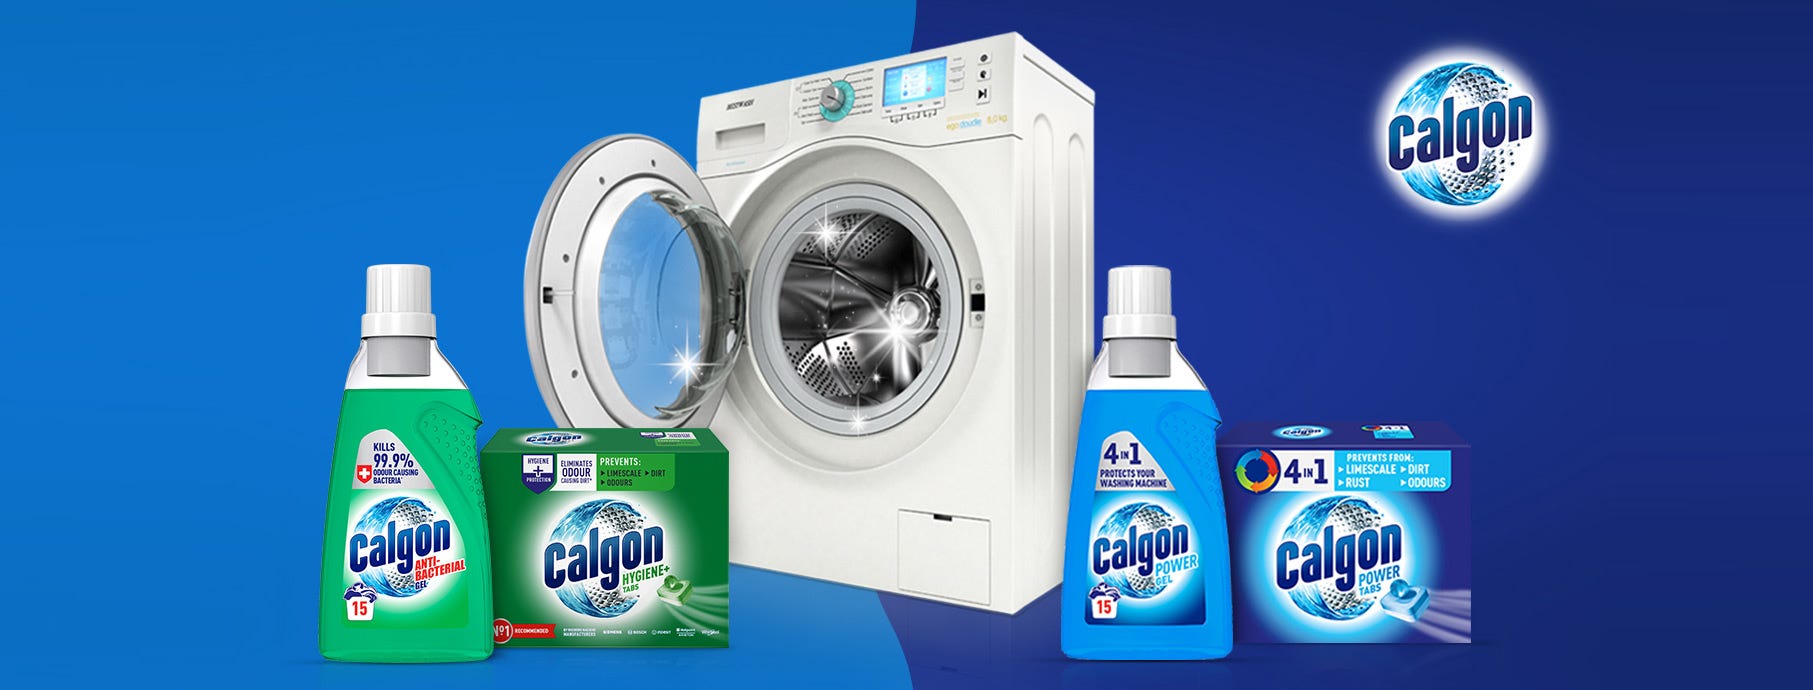 Washing Machine Laundry Detergent